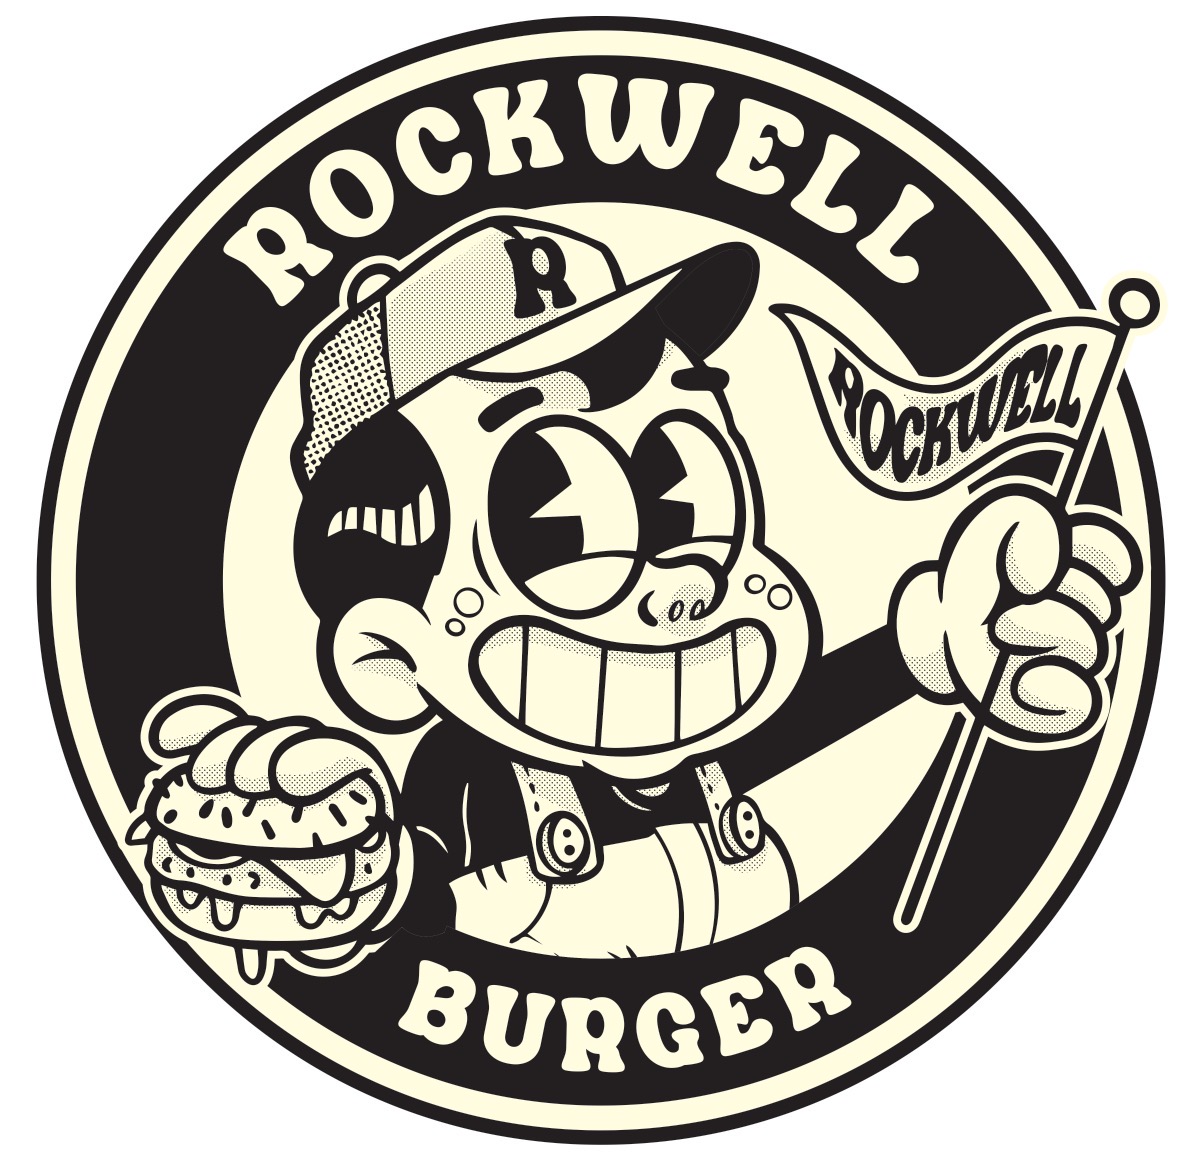 Rockwell Burger